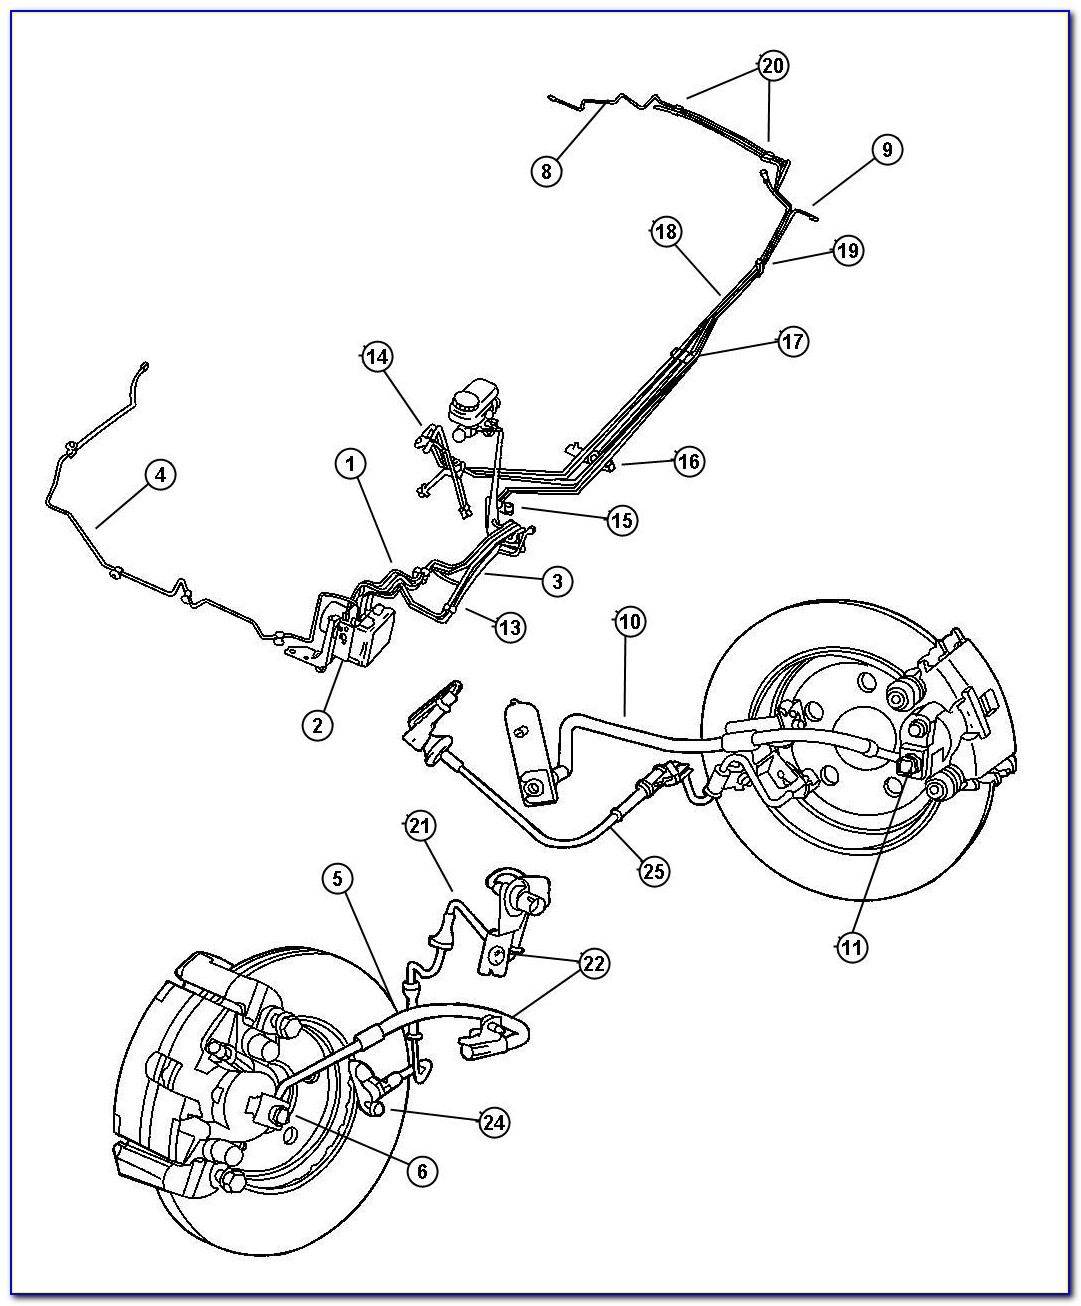 2001 Camaro Radio Wiring Diagram